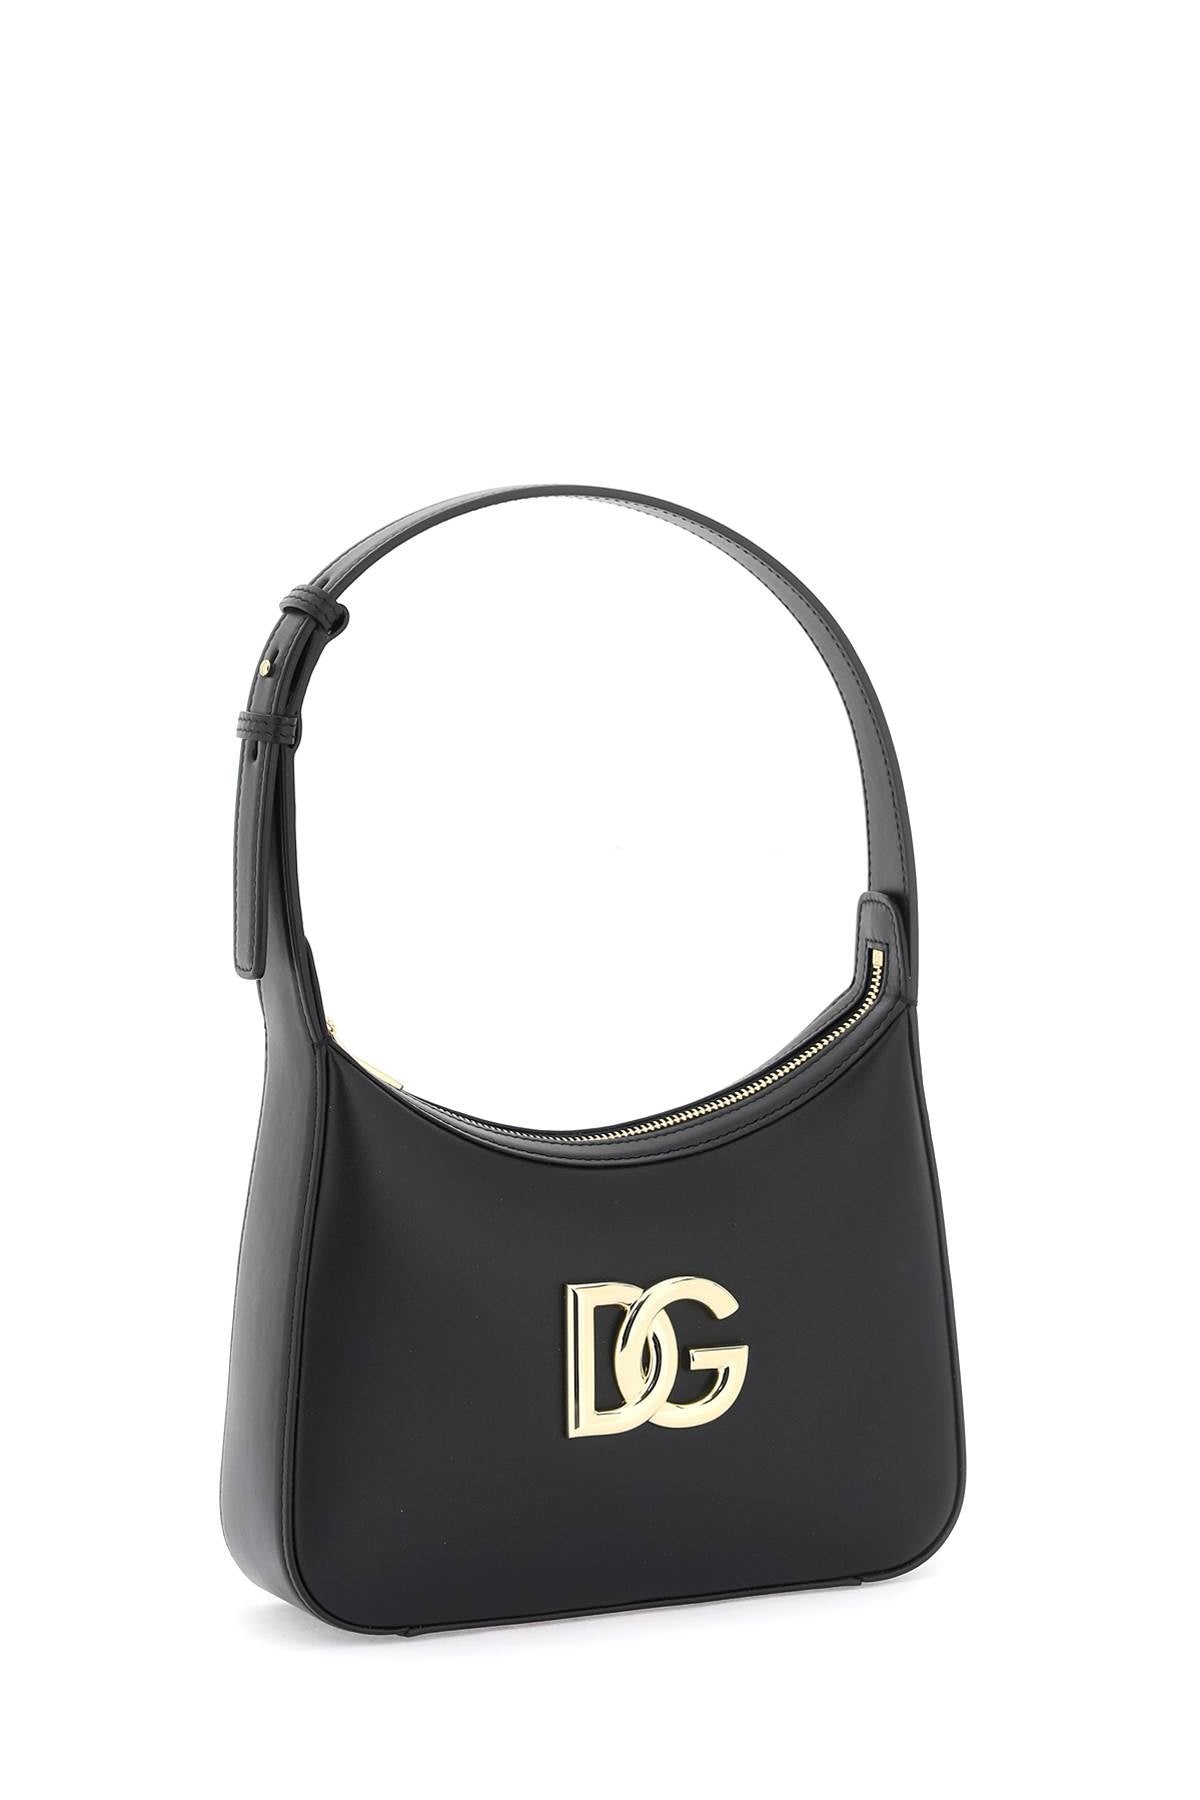 Dolce & Gabbana 3.5 Shoulder Bag Women - 3